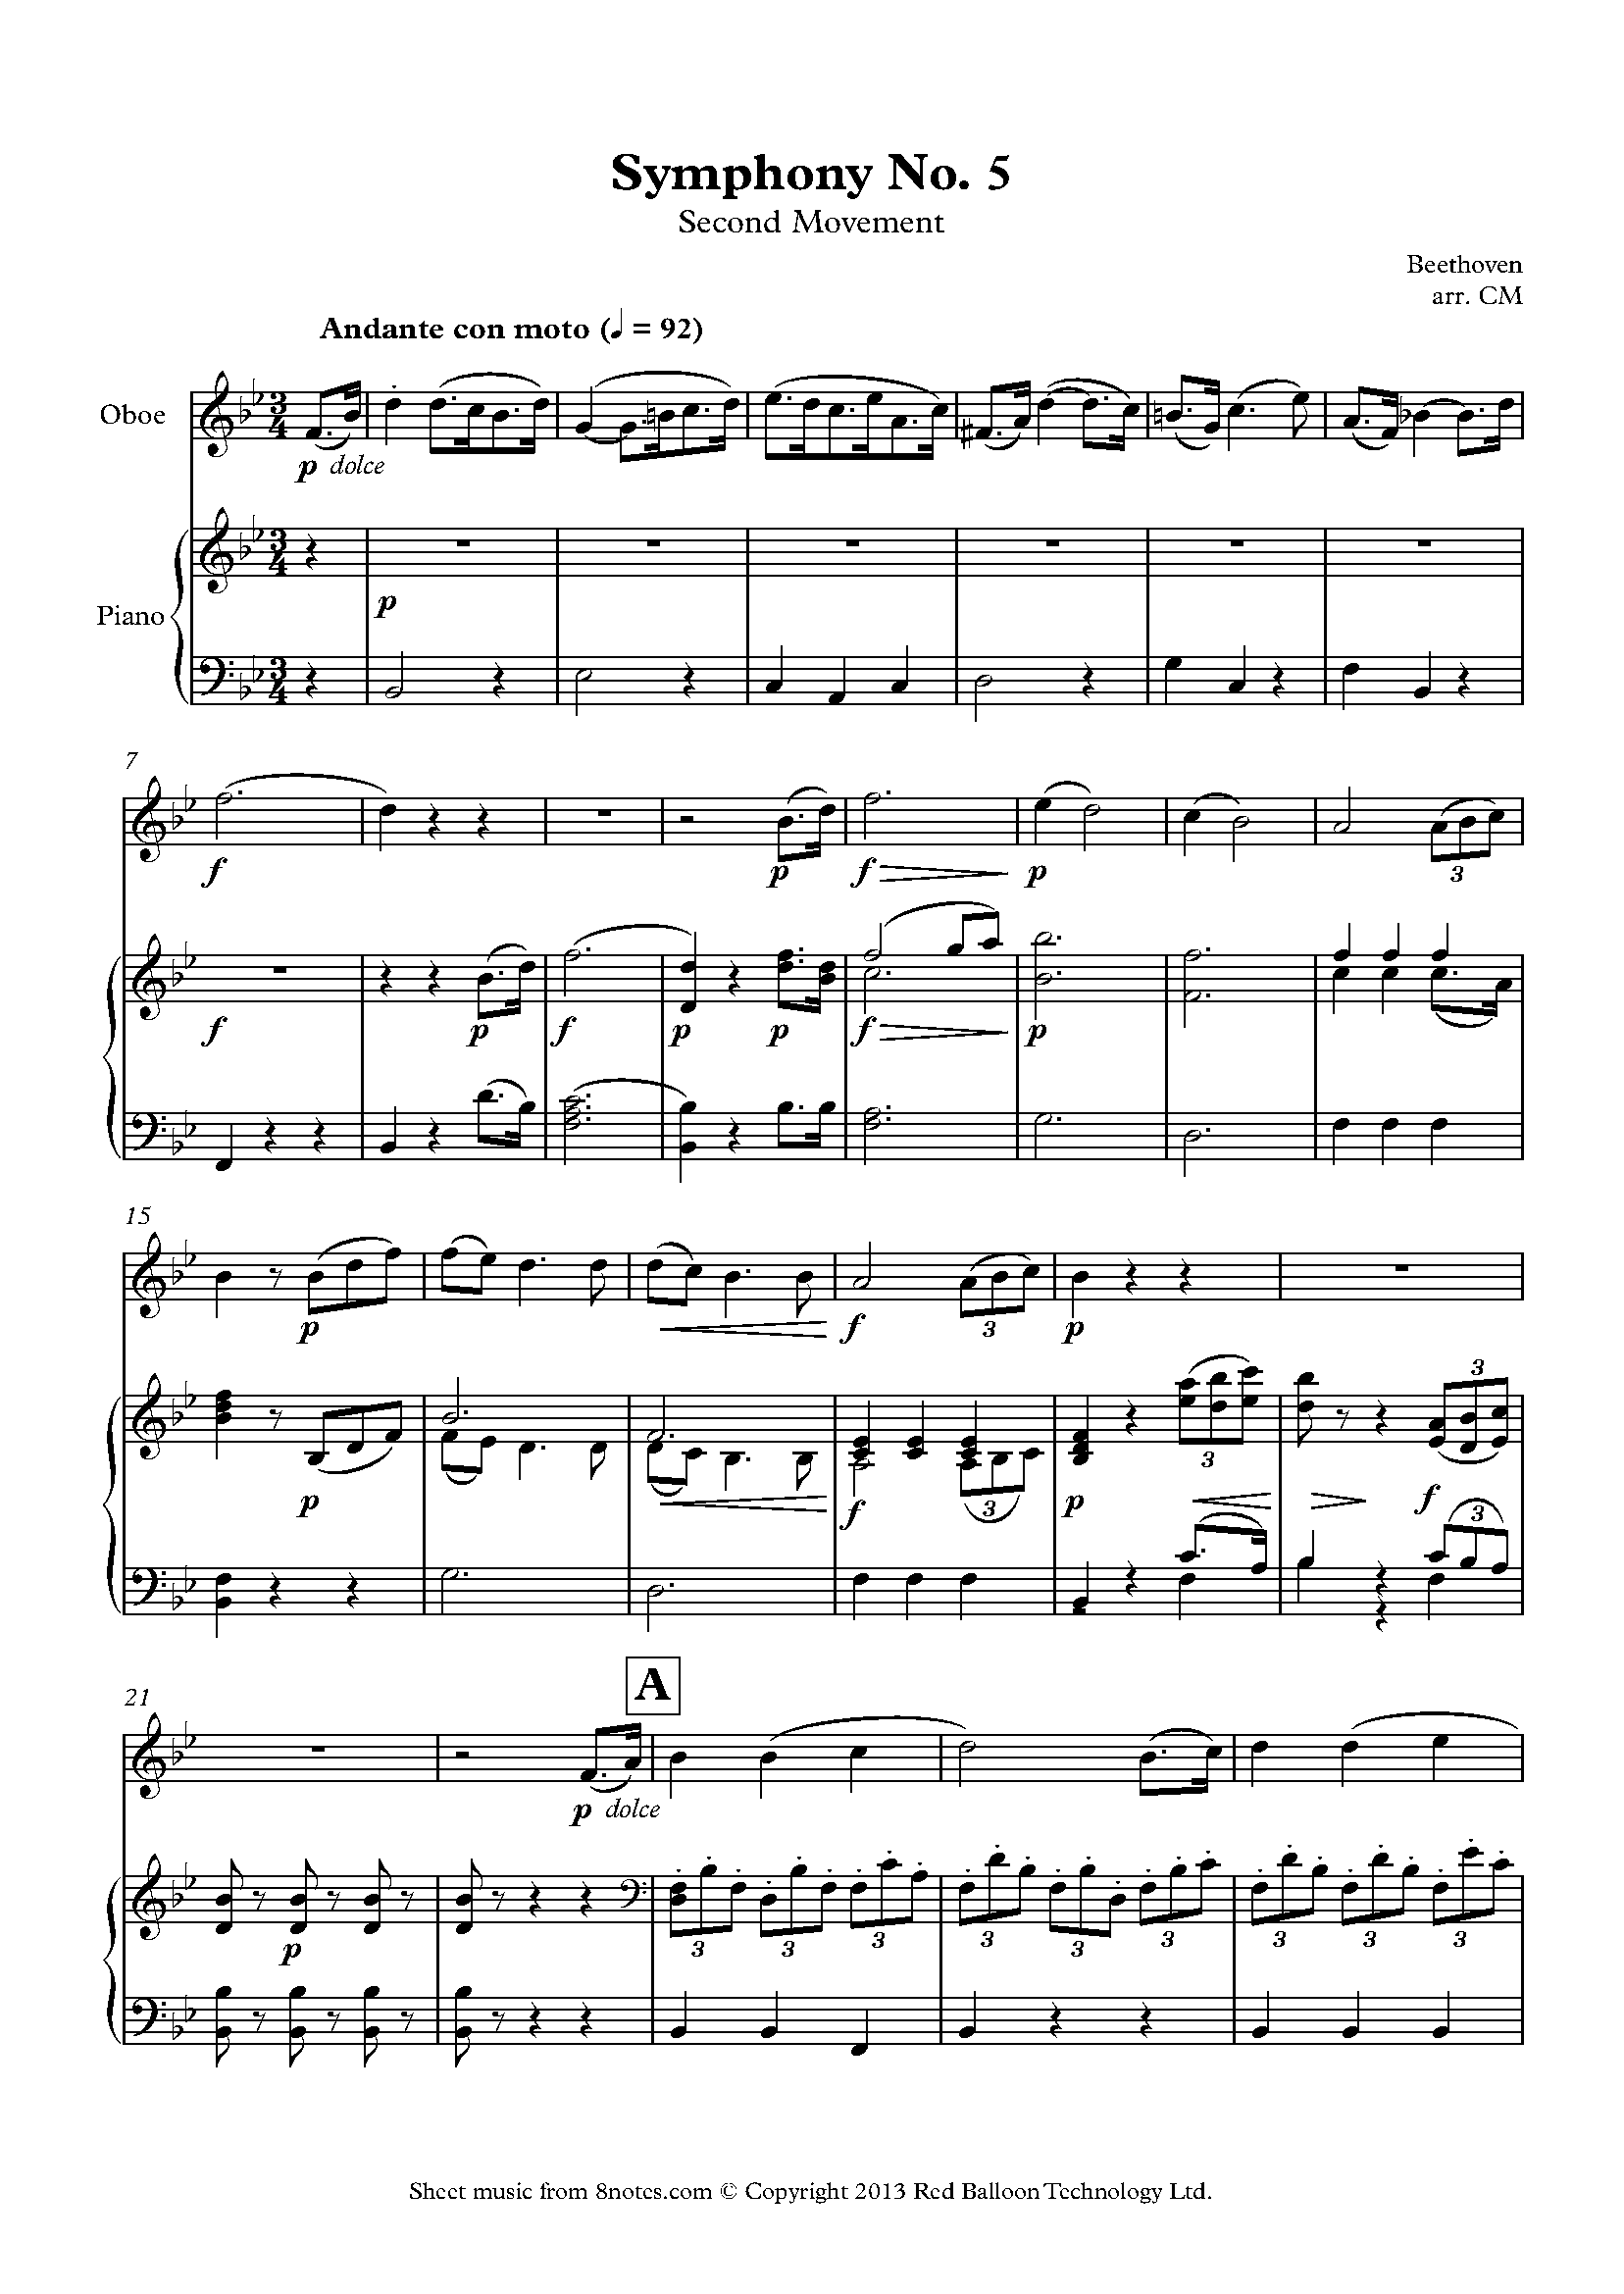 Oboe Chart